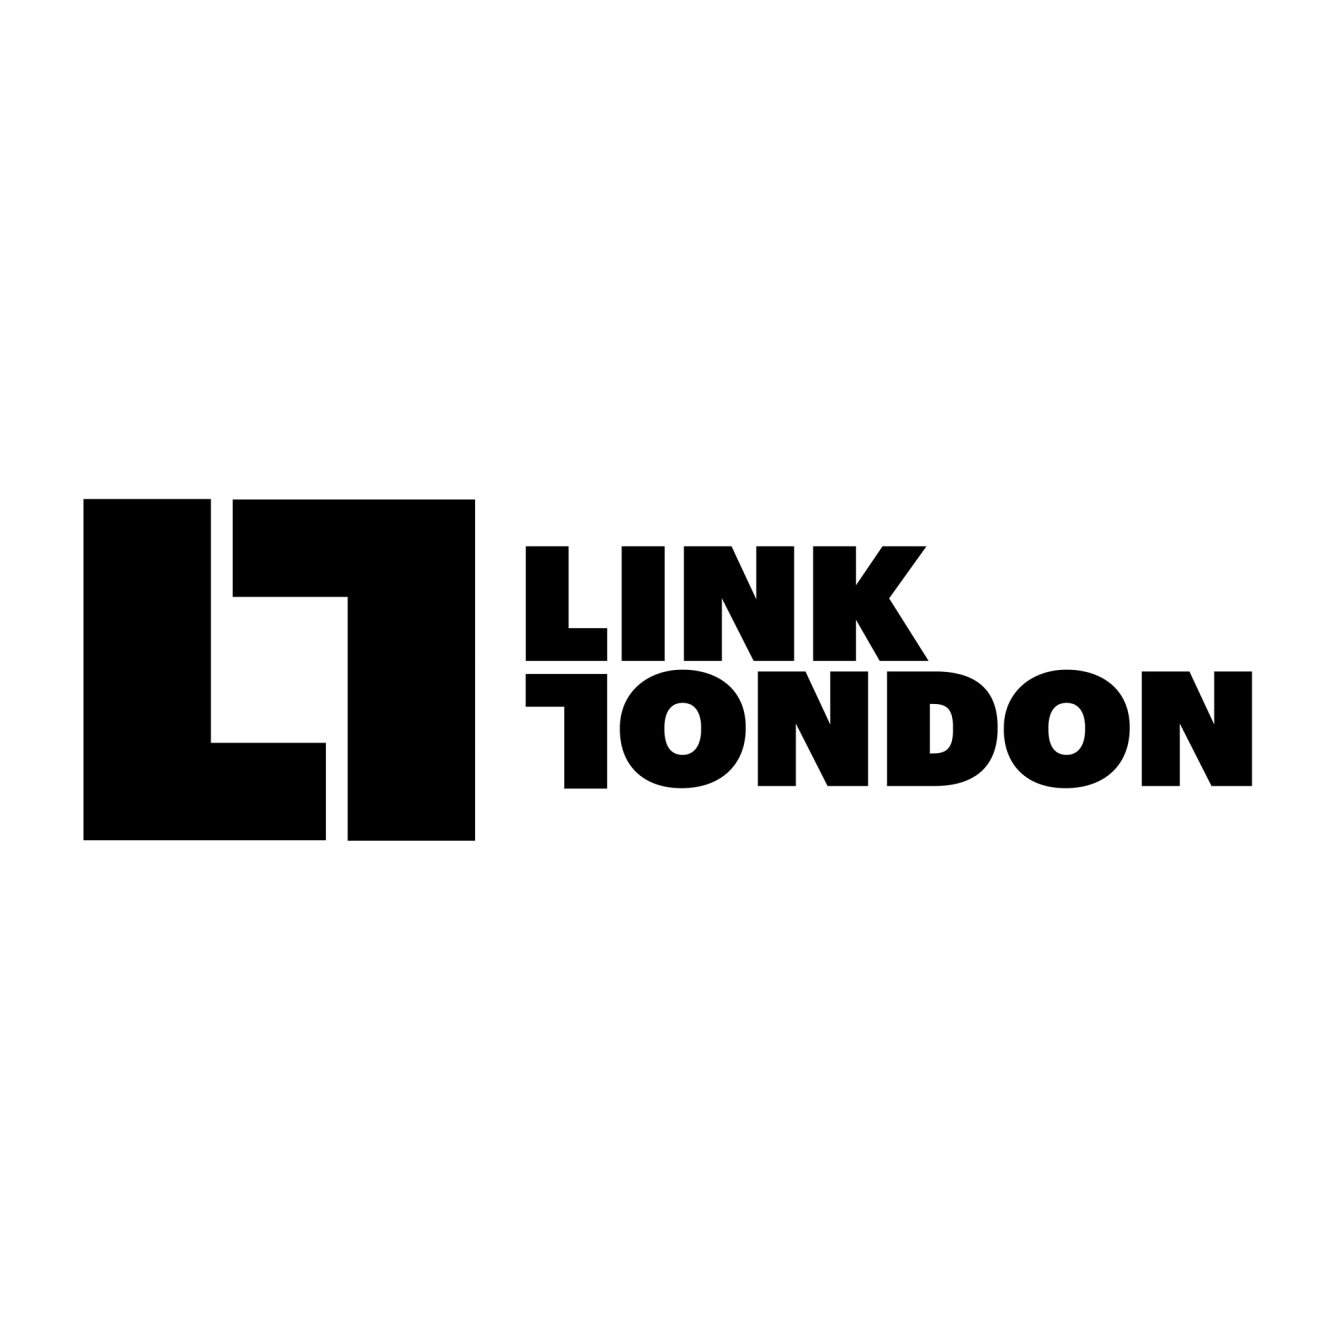 Link London - A Lister / Reset Safari / James Silk / Ill Phil / Tom Bull / Bumpy Fool & More - フライヤー裏